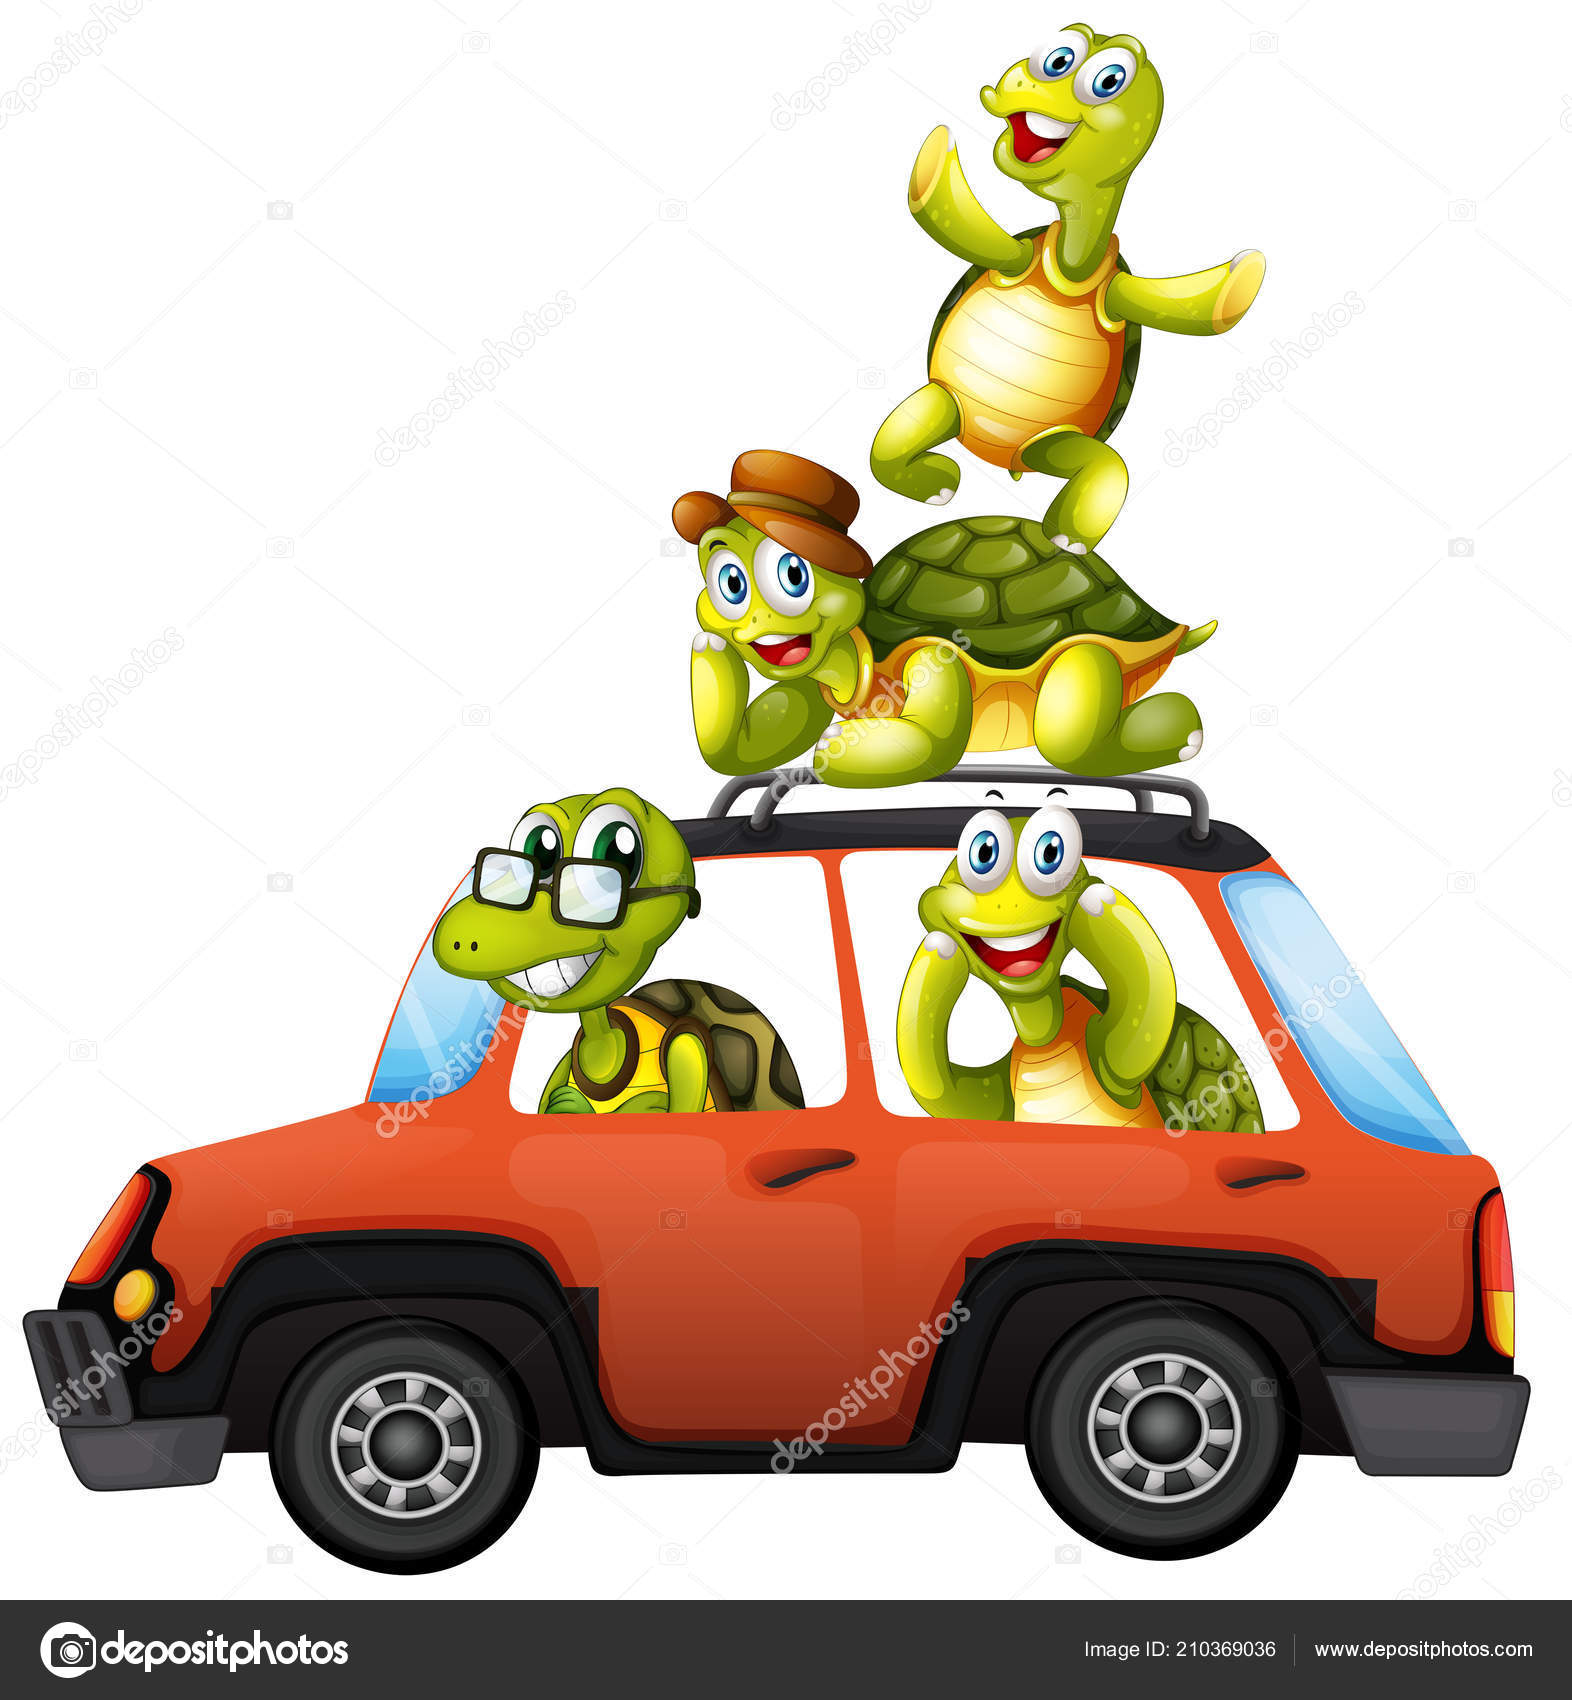 Turtle car Vector Art Stock Images | Depositphotos